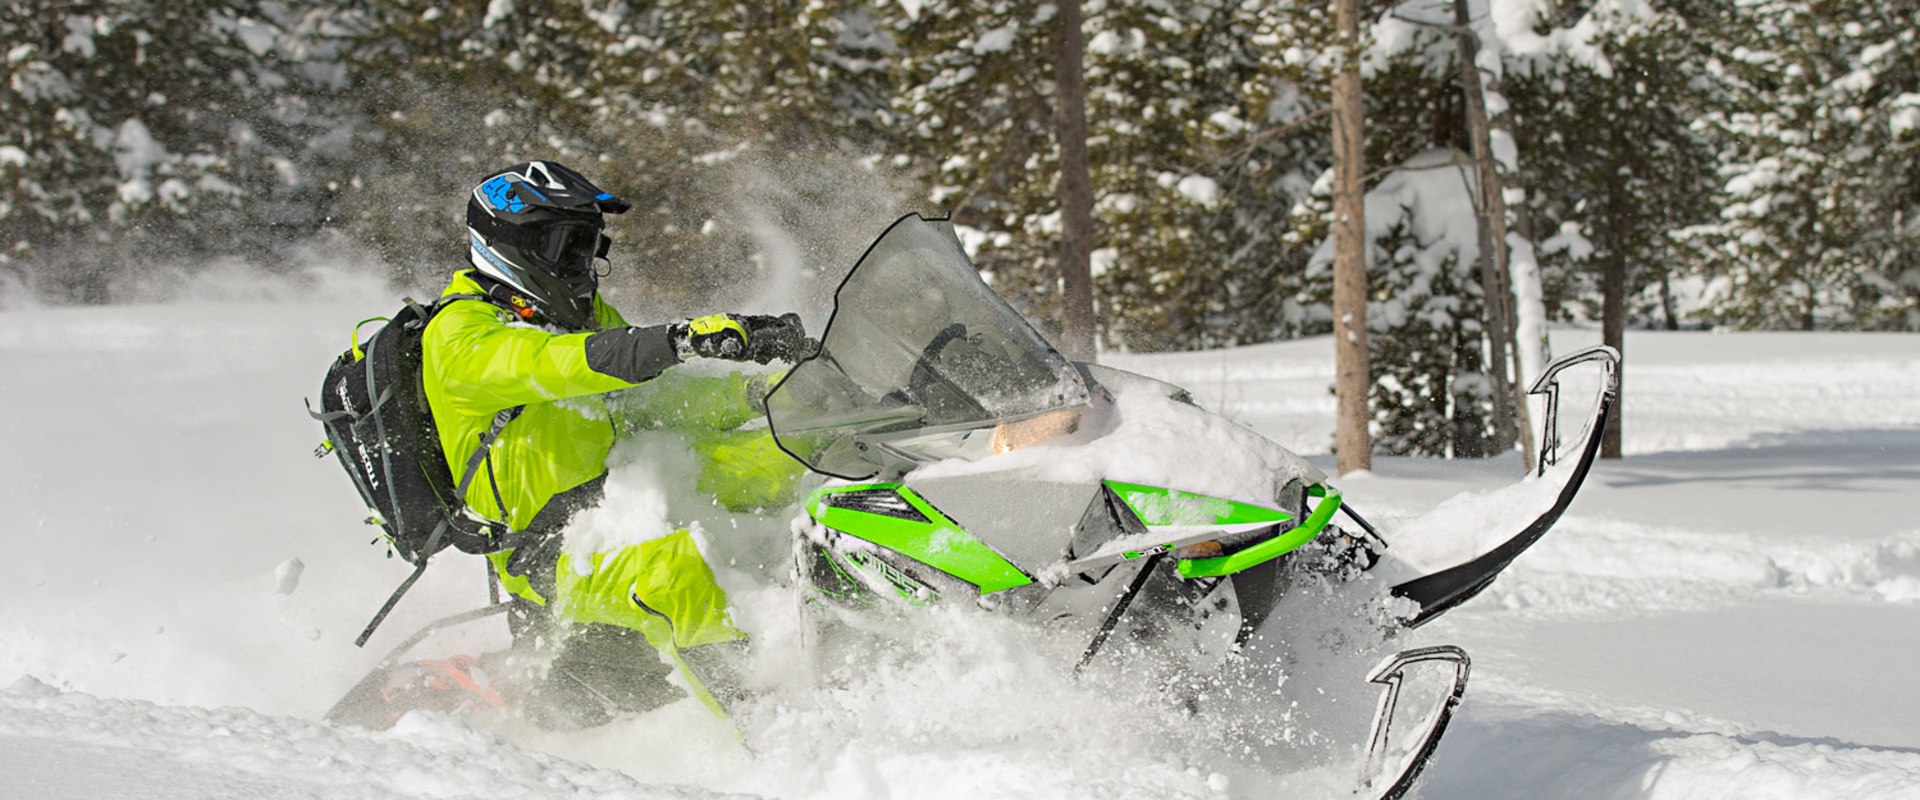 How fast does an 800 cc snowmobile go?